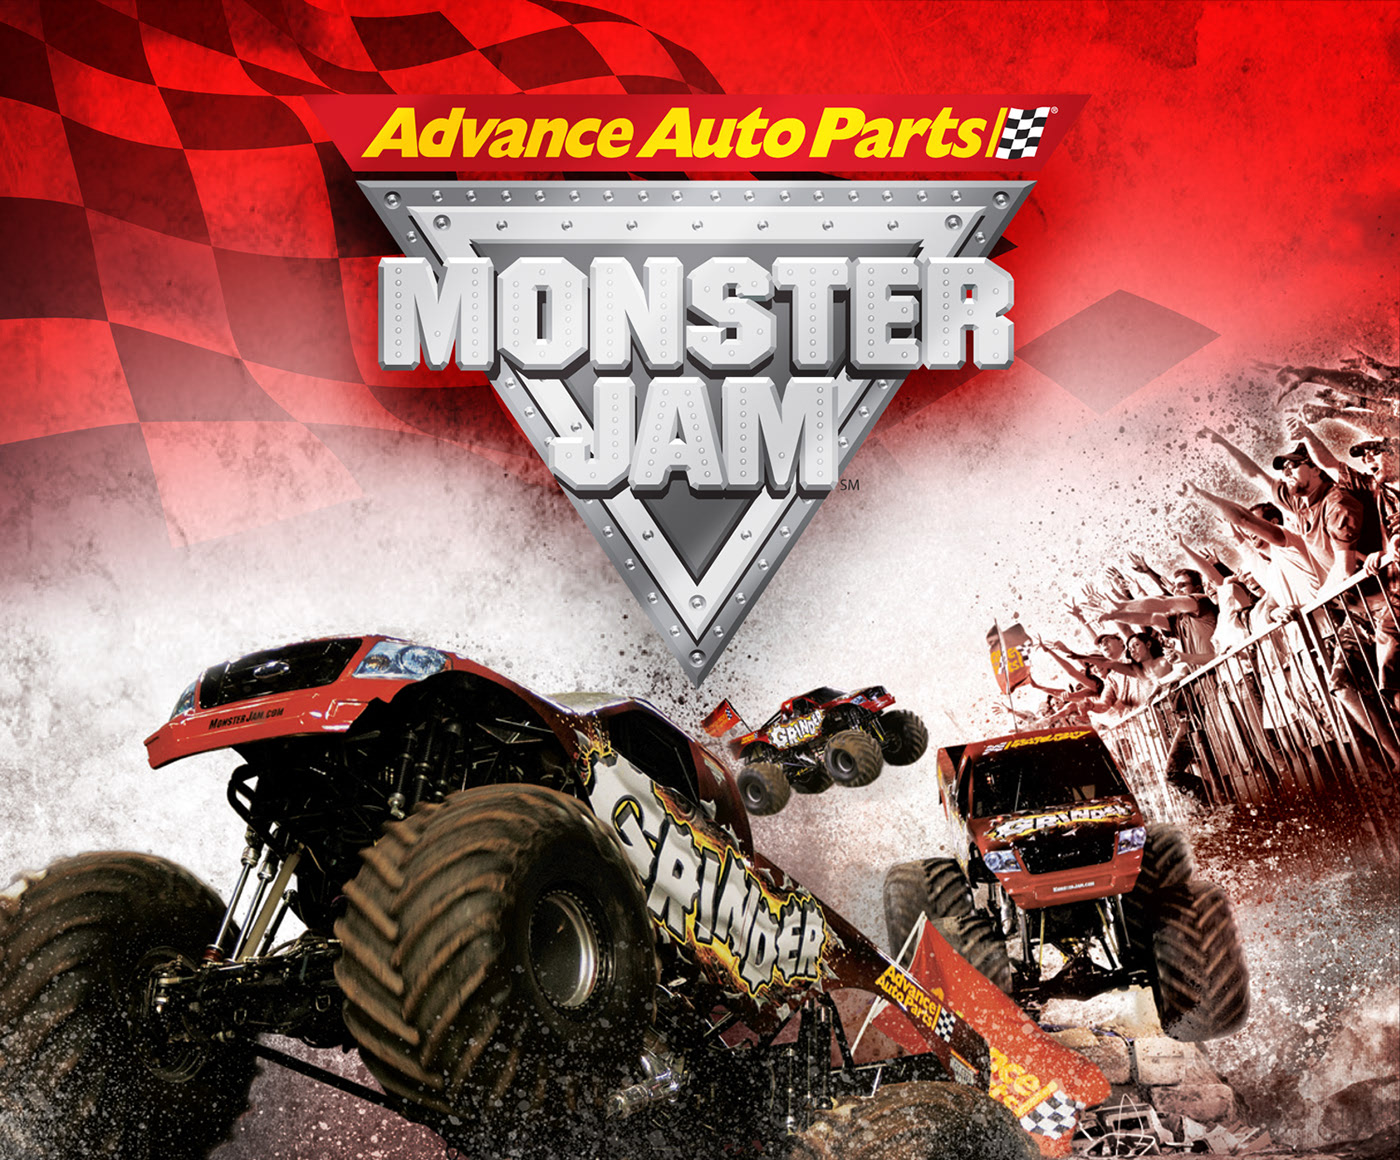 advance auto parts monster Truck rally monster jam partnership Sponsorship ...